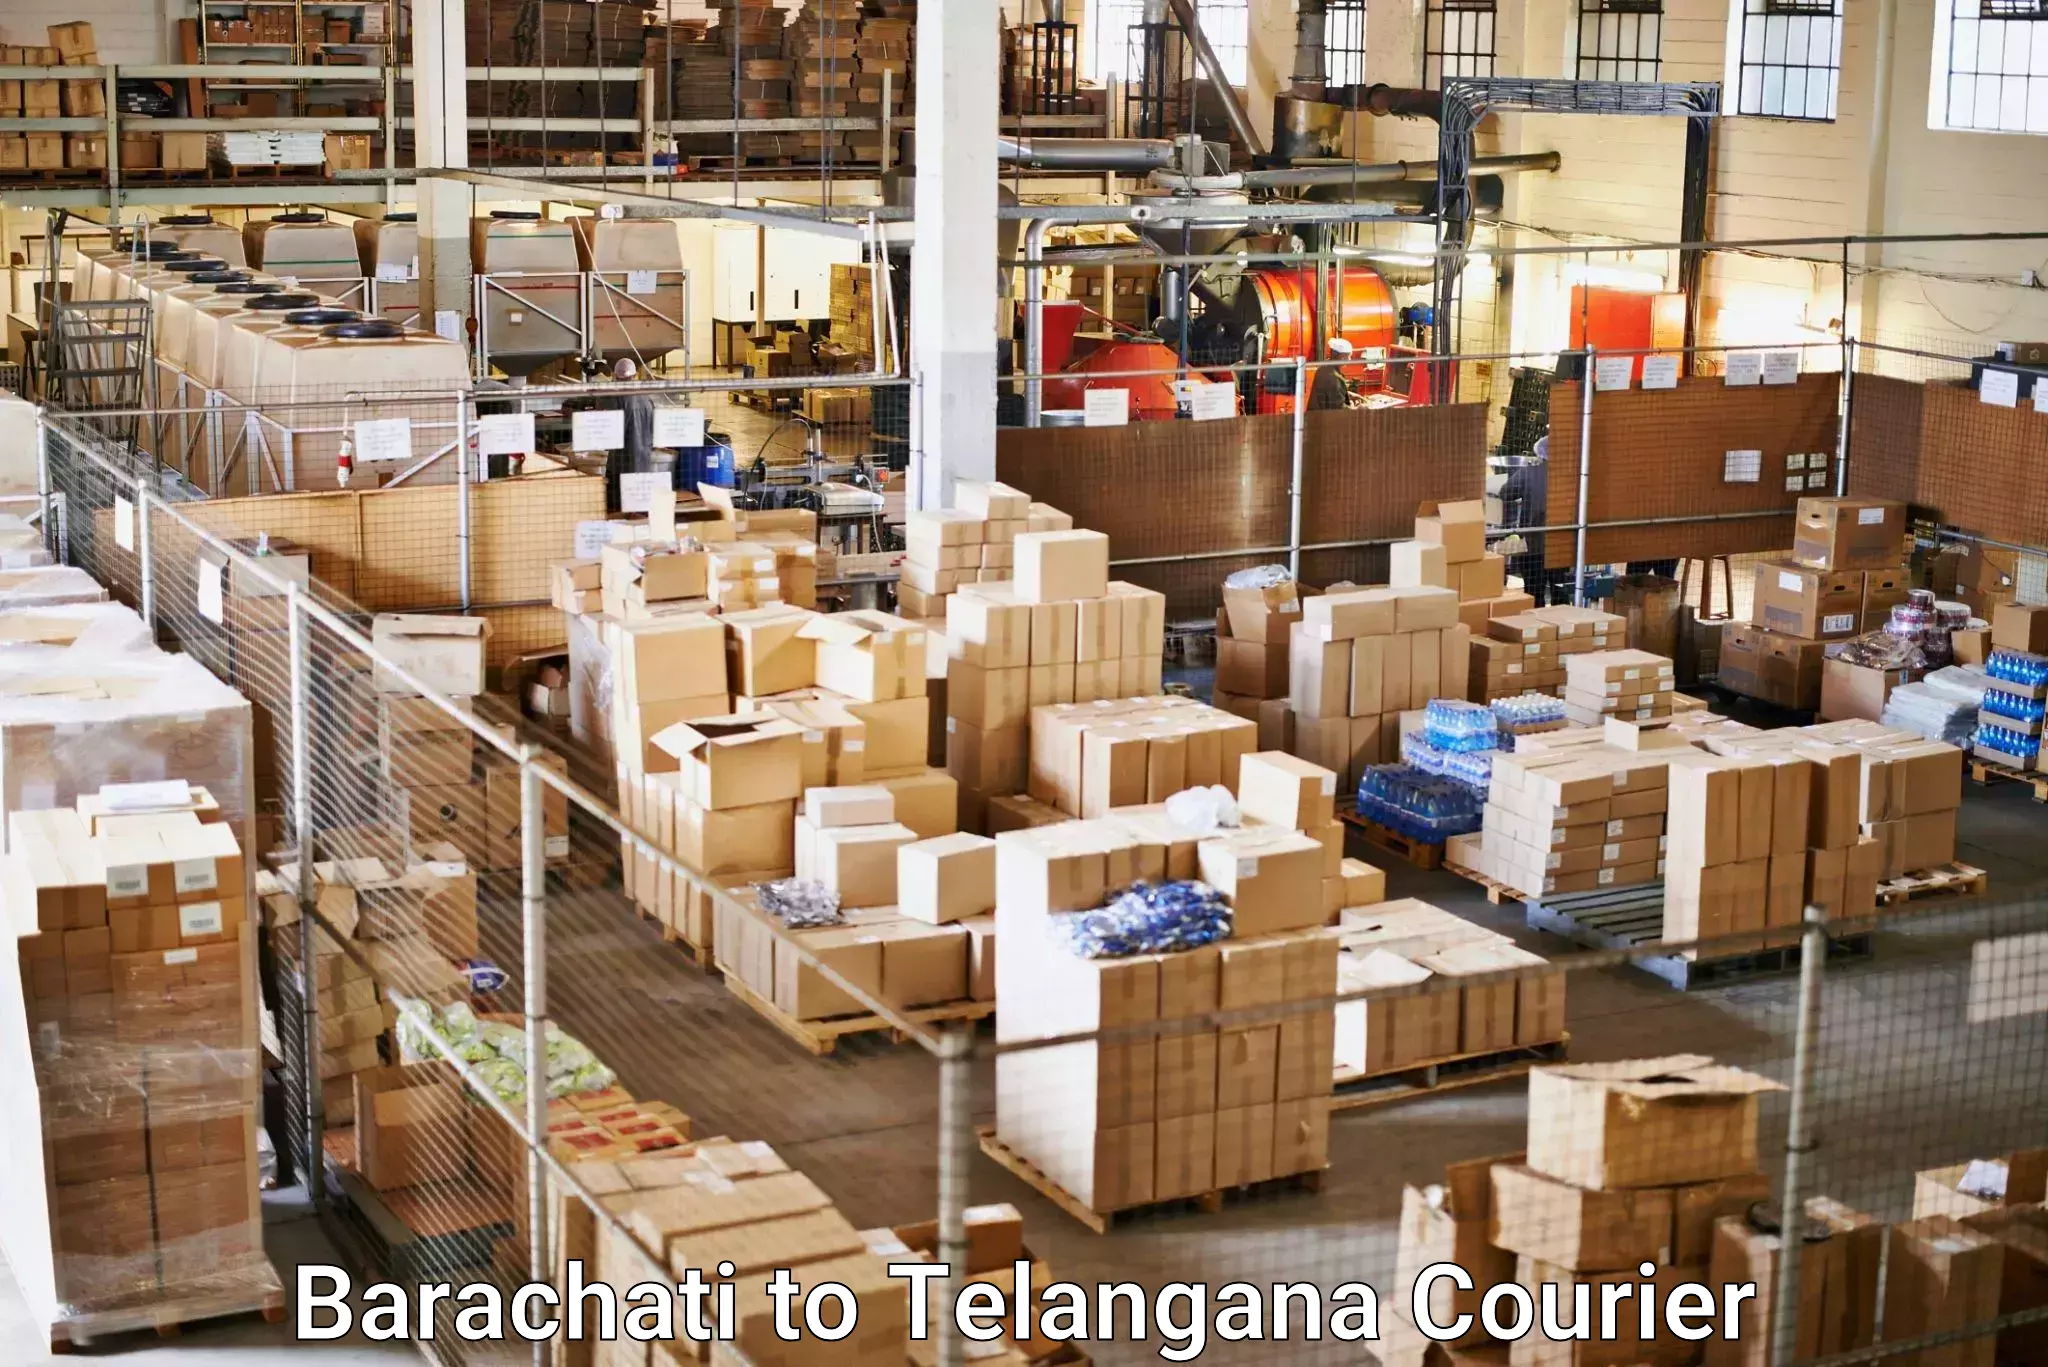 Express delivery capabilities Barachati to Tiryani